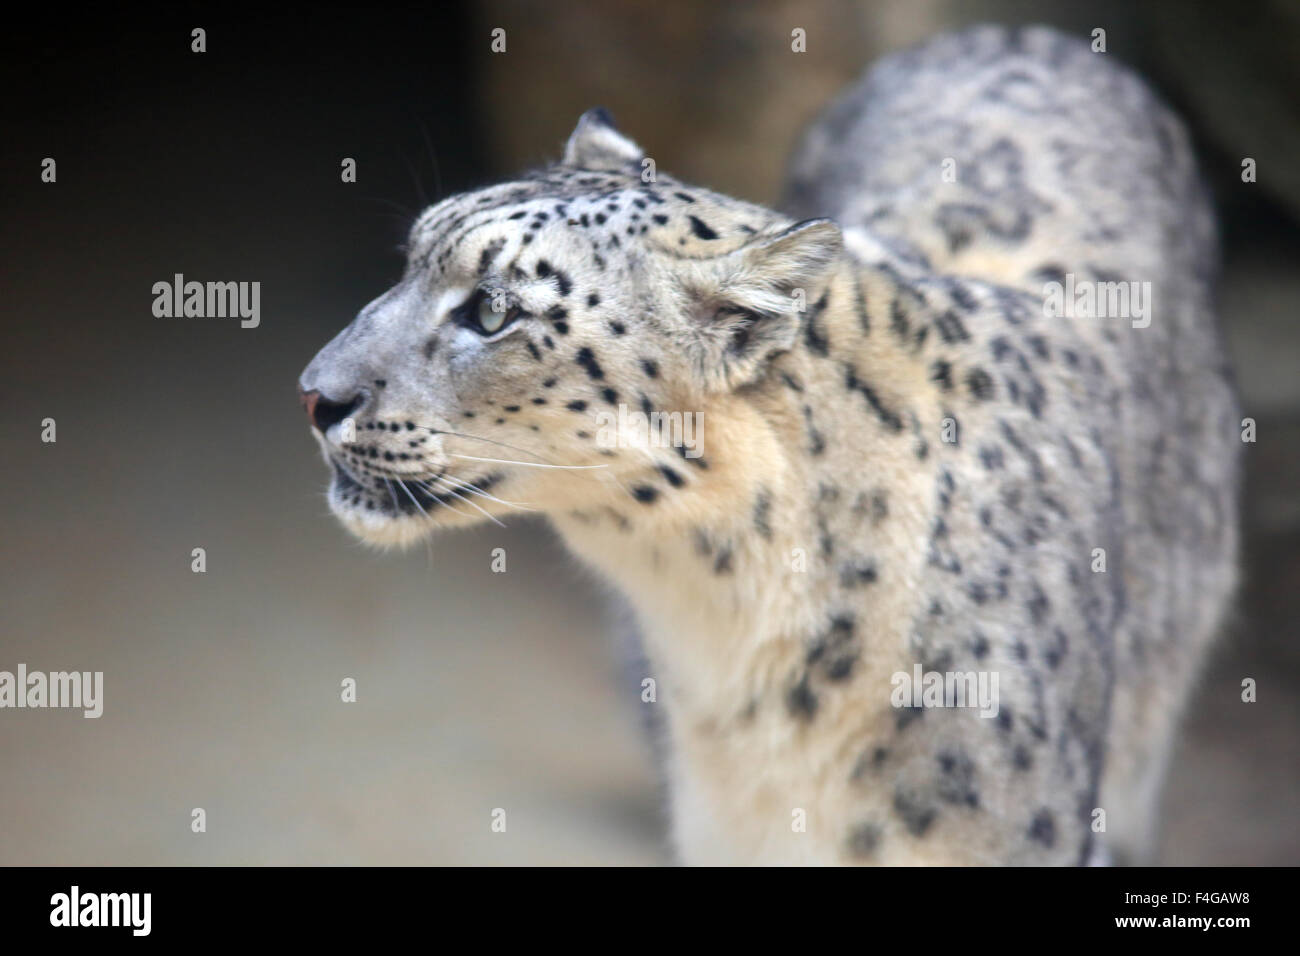 Snow leopard (Panthera uncia) Stock Photo